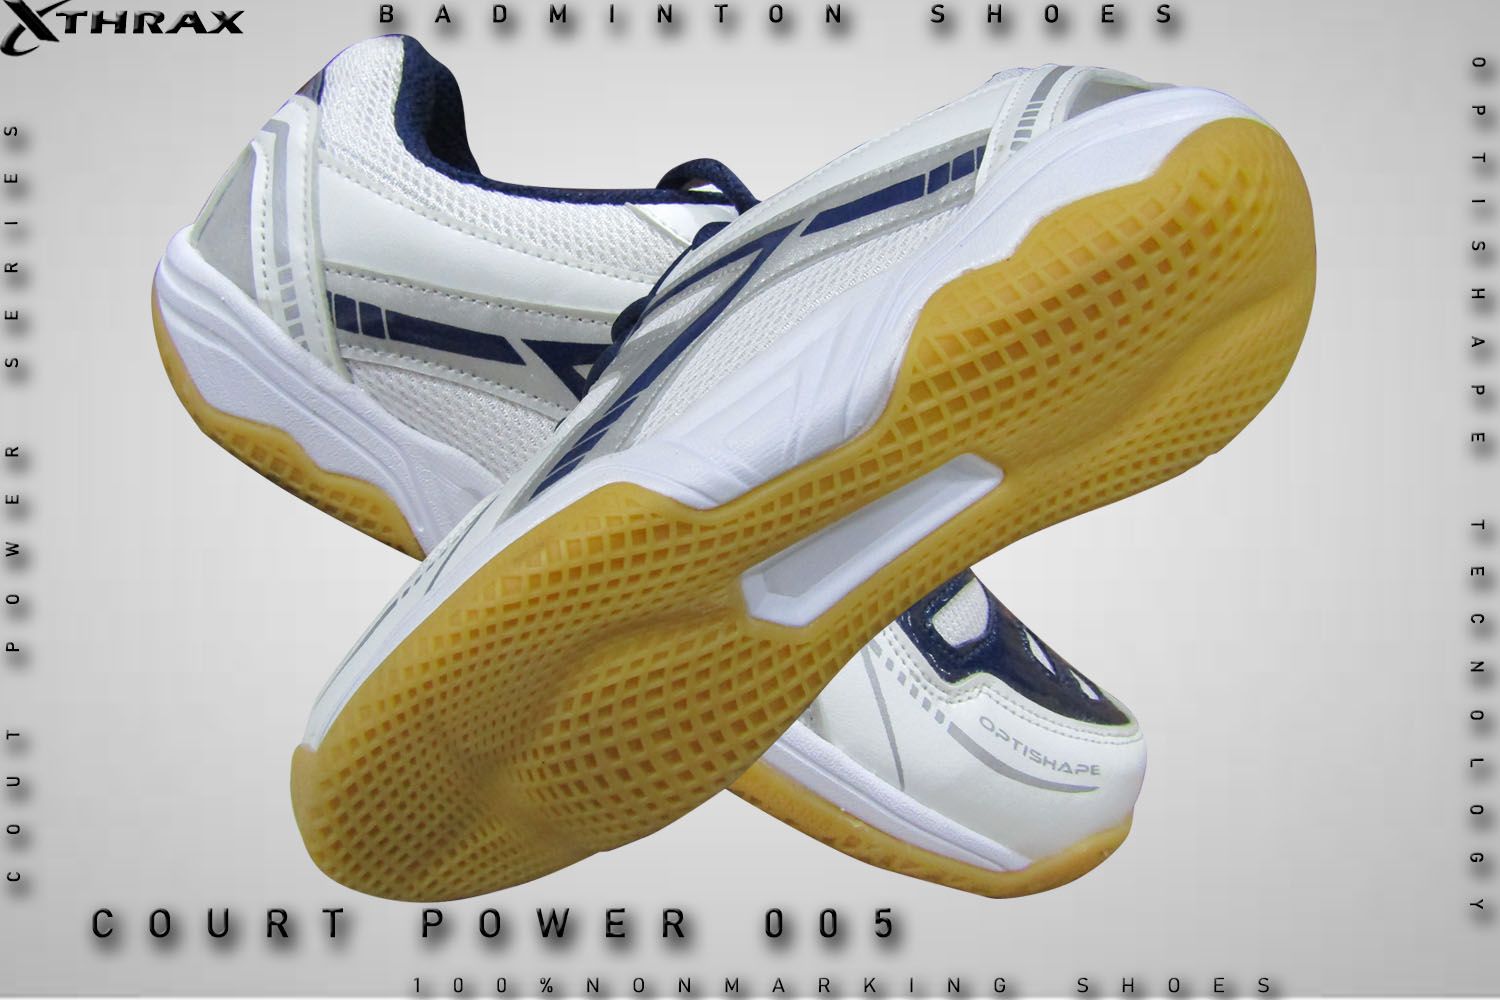 Thrax_Court_Power_005_badminron_shoes